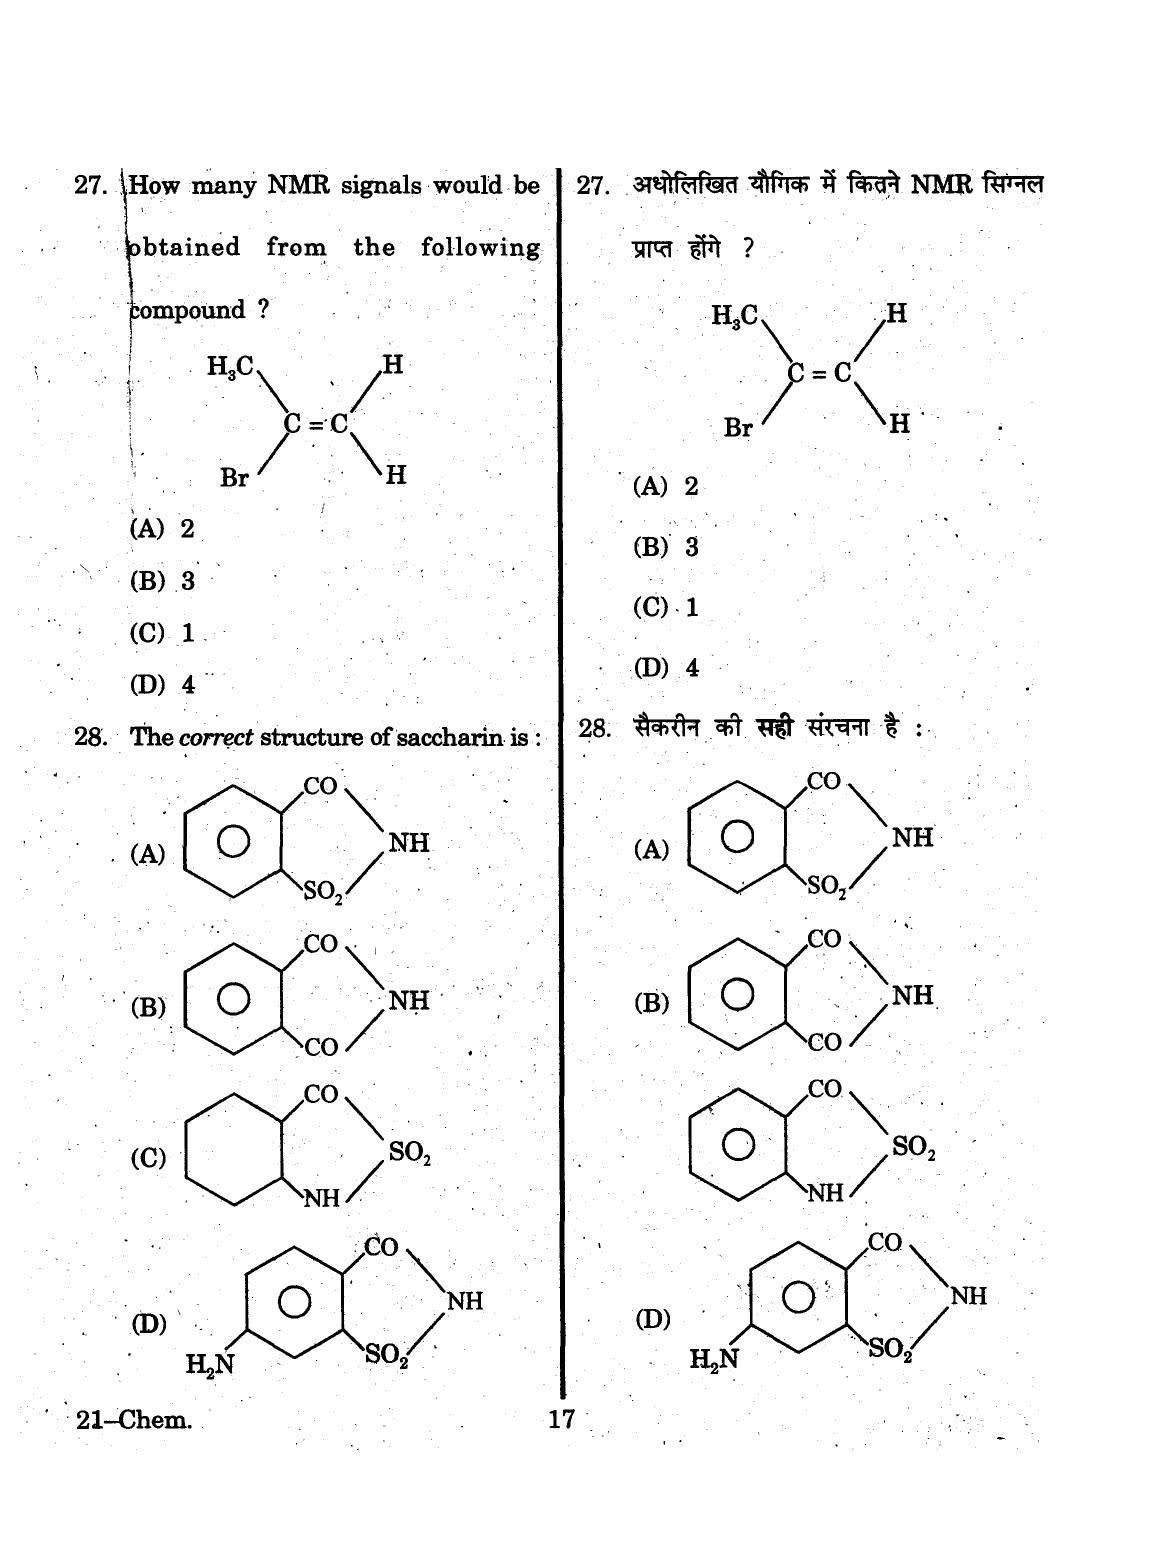 URATPG 2015 Chemisty Question Paper - Page 17